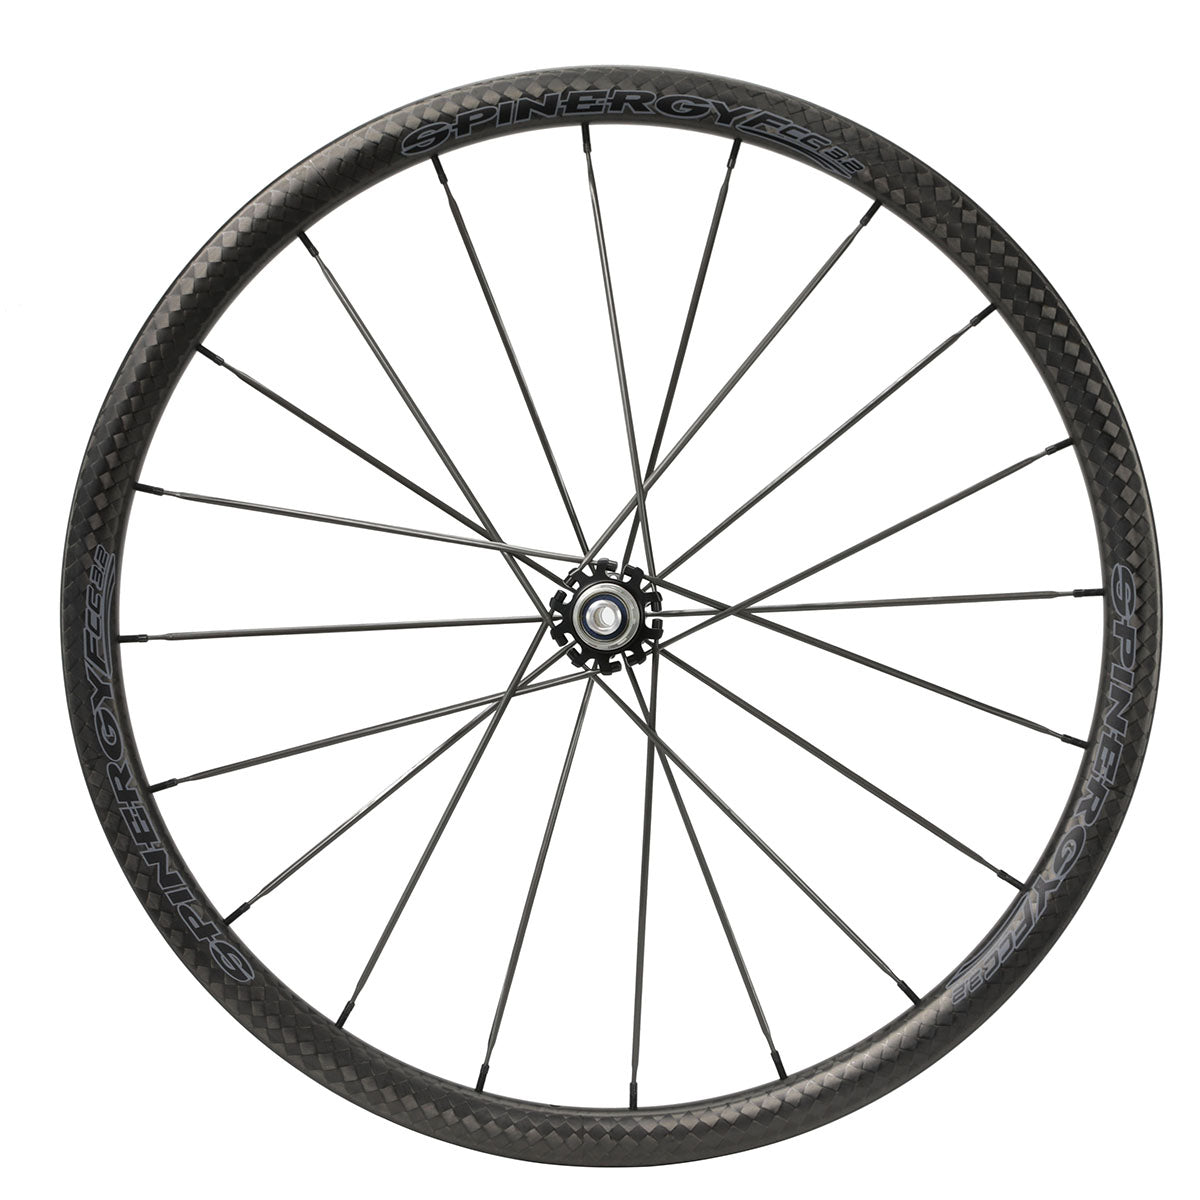 SPINERGY FCC 32 700c Rear Wheel for Road Bikes (Improved "44" Hub)